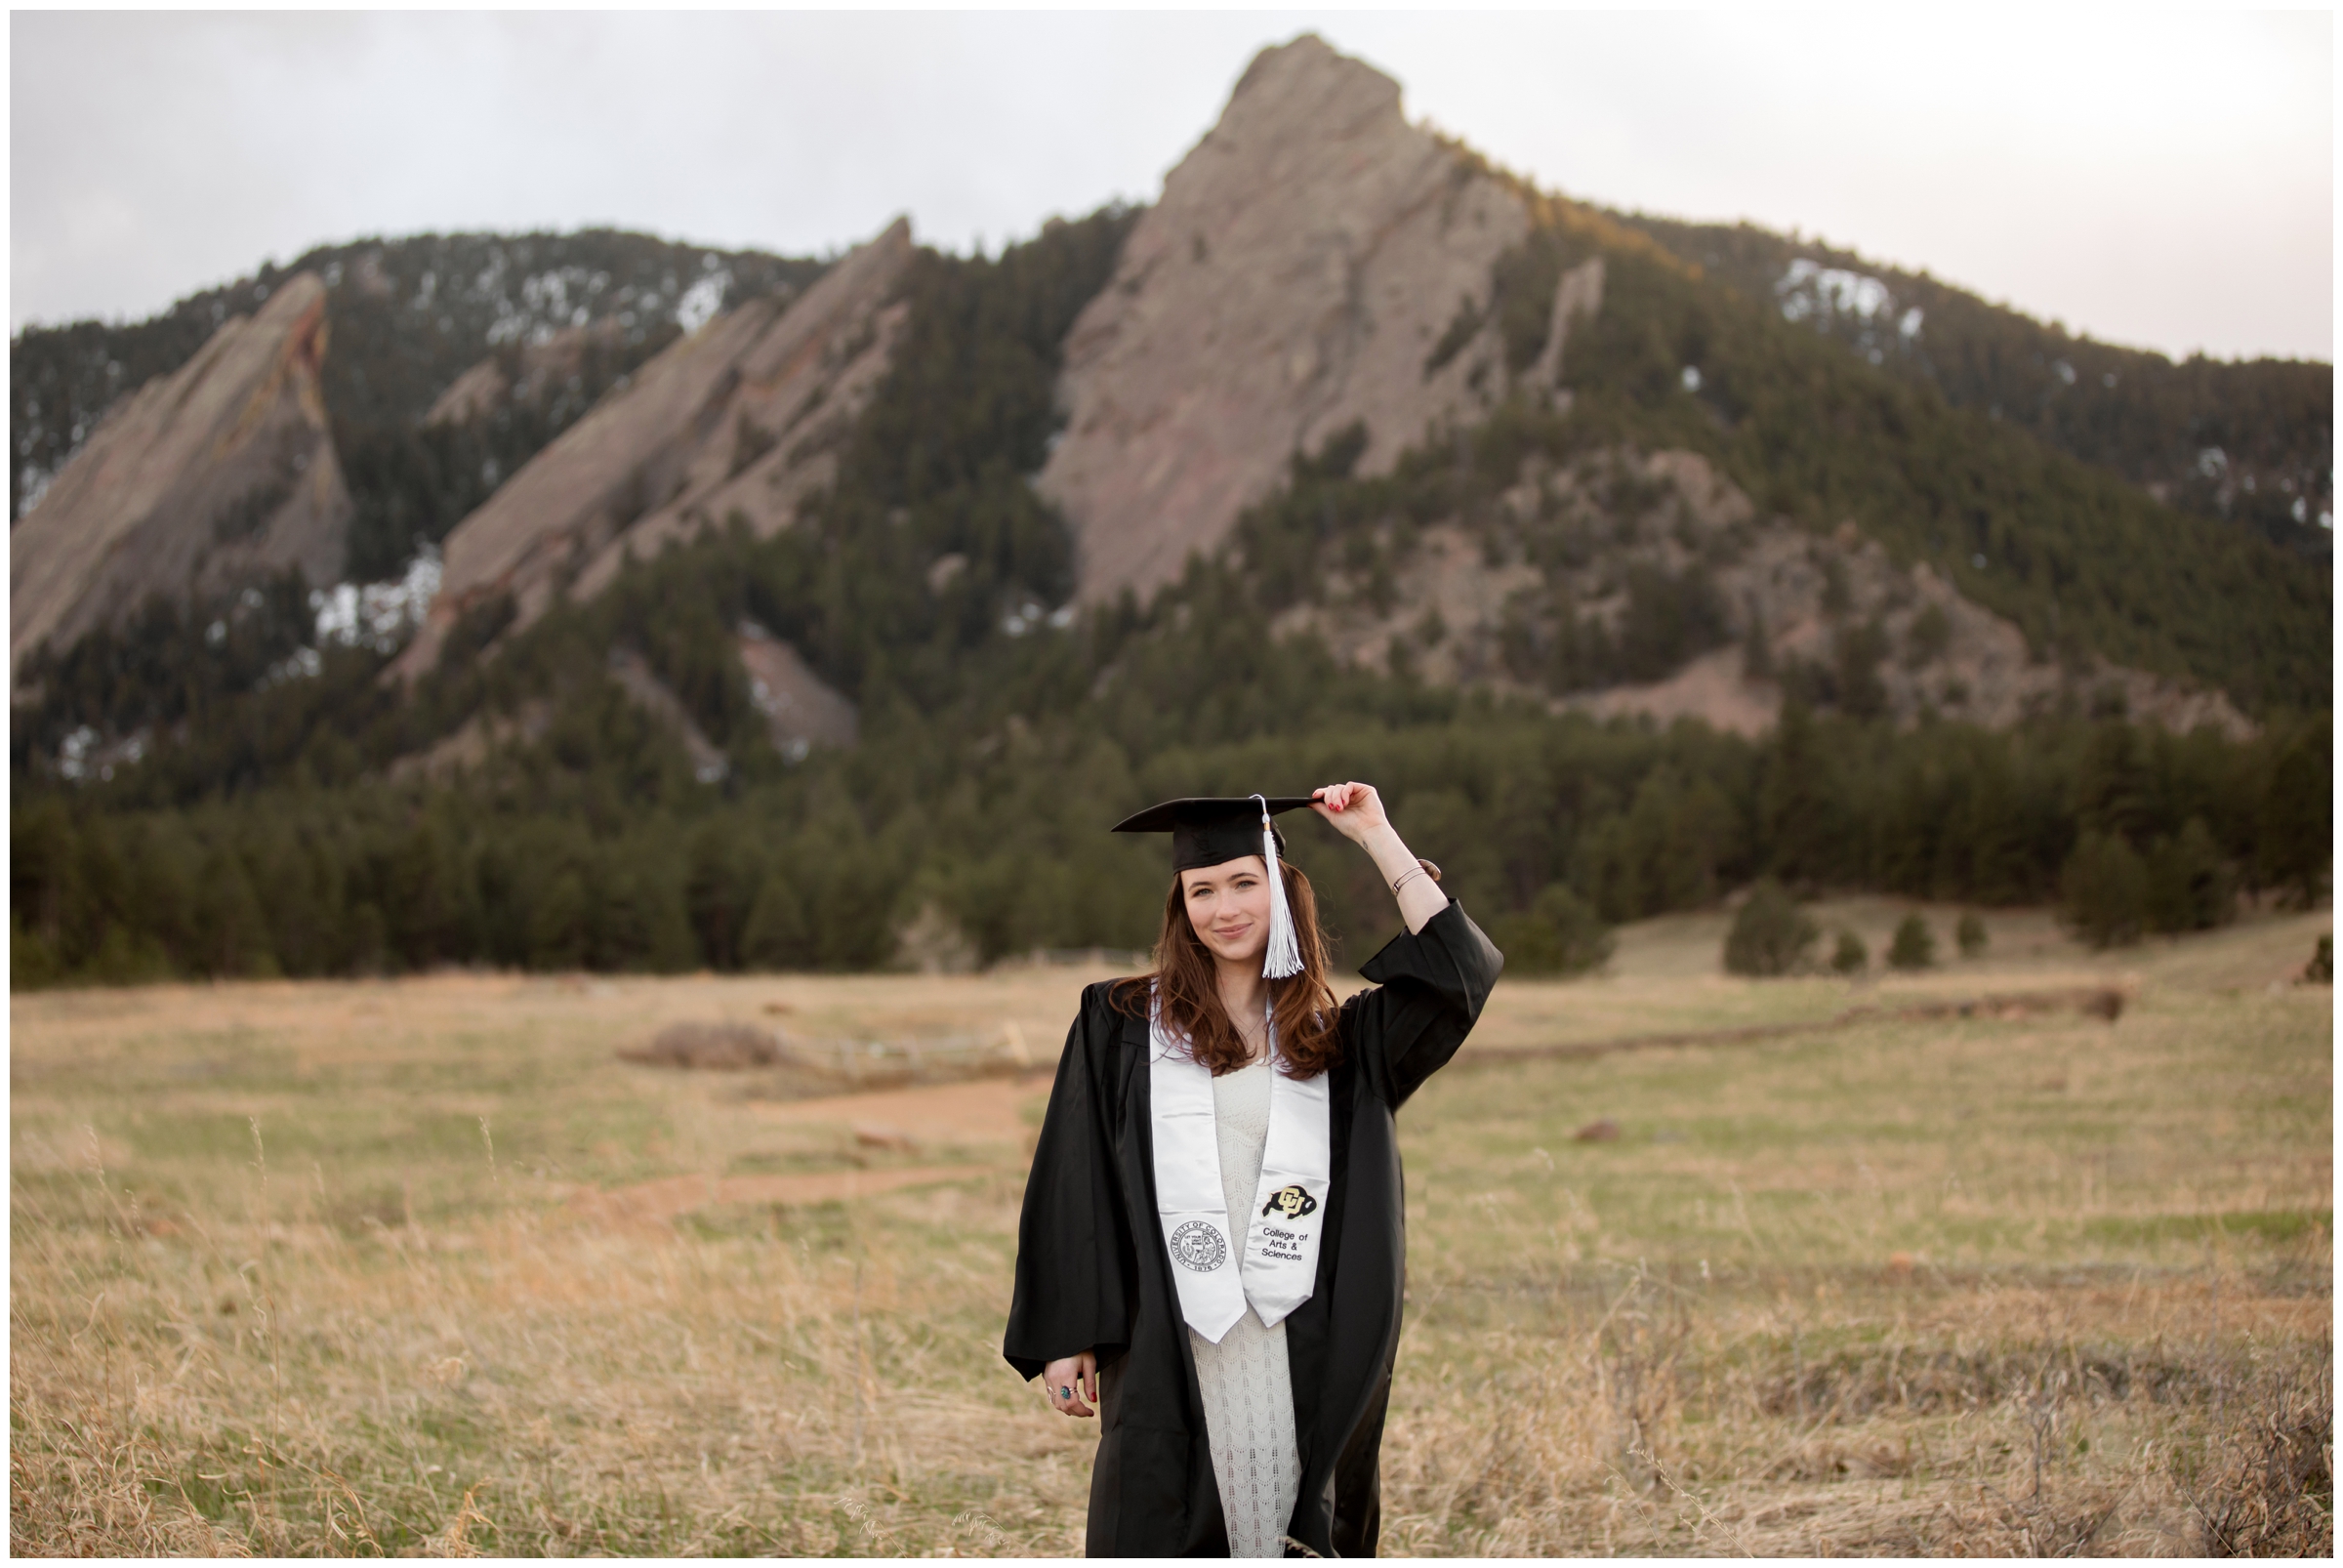 College graduation photography session at Chautauqua Park in Colorado 